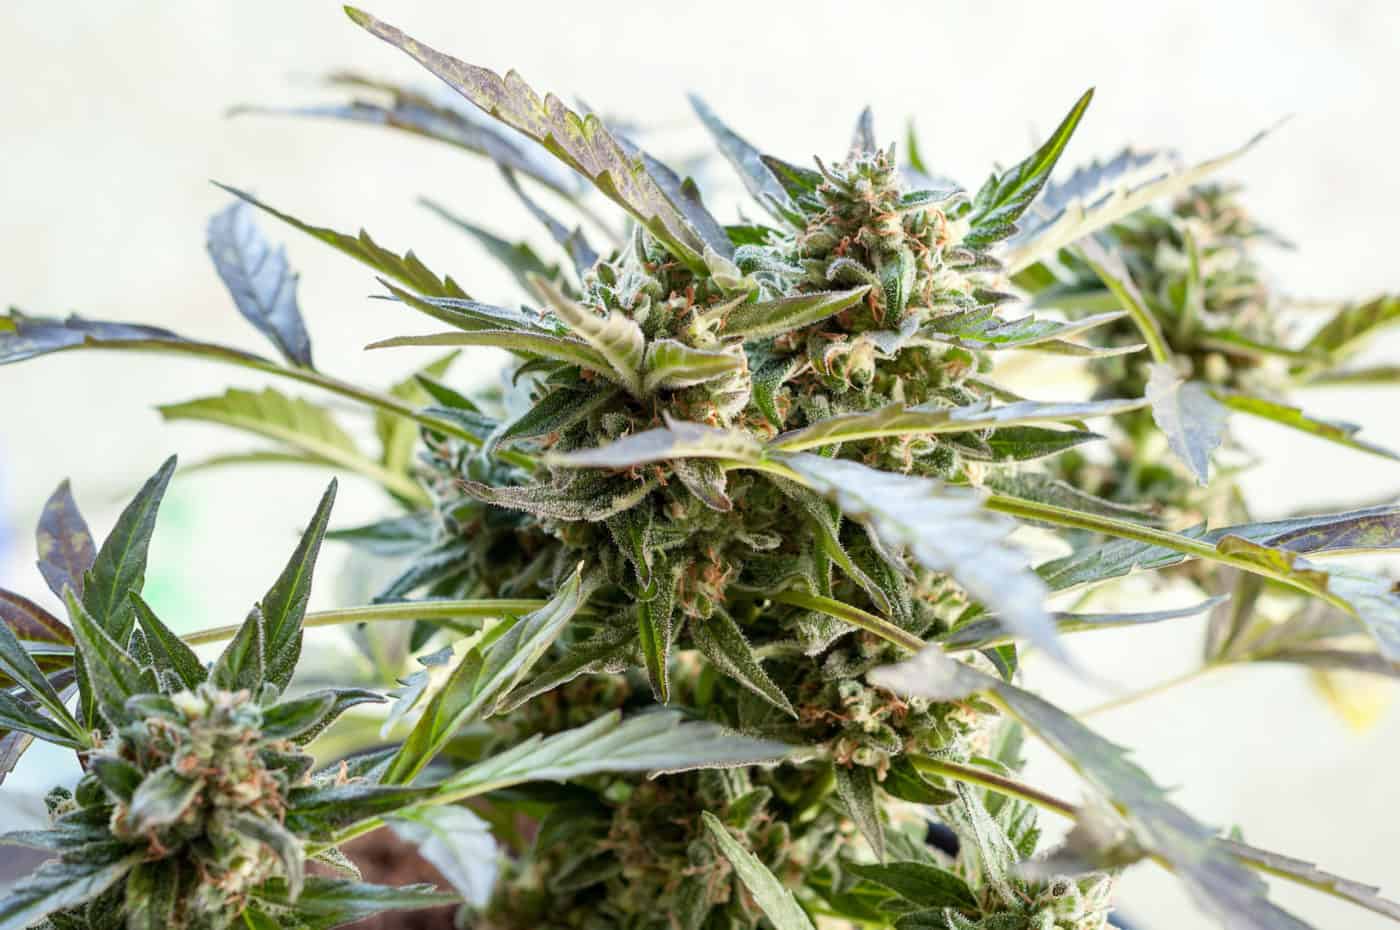 cannabis strains isolated on white, popular hybrid strains